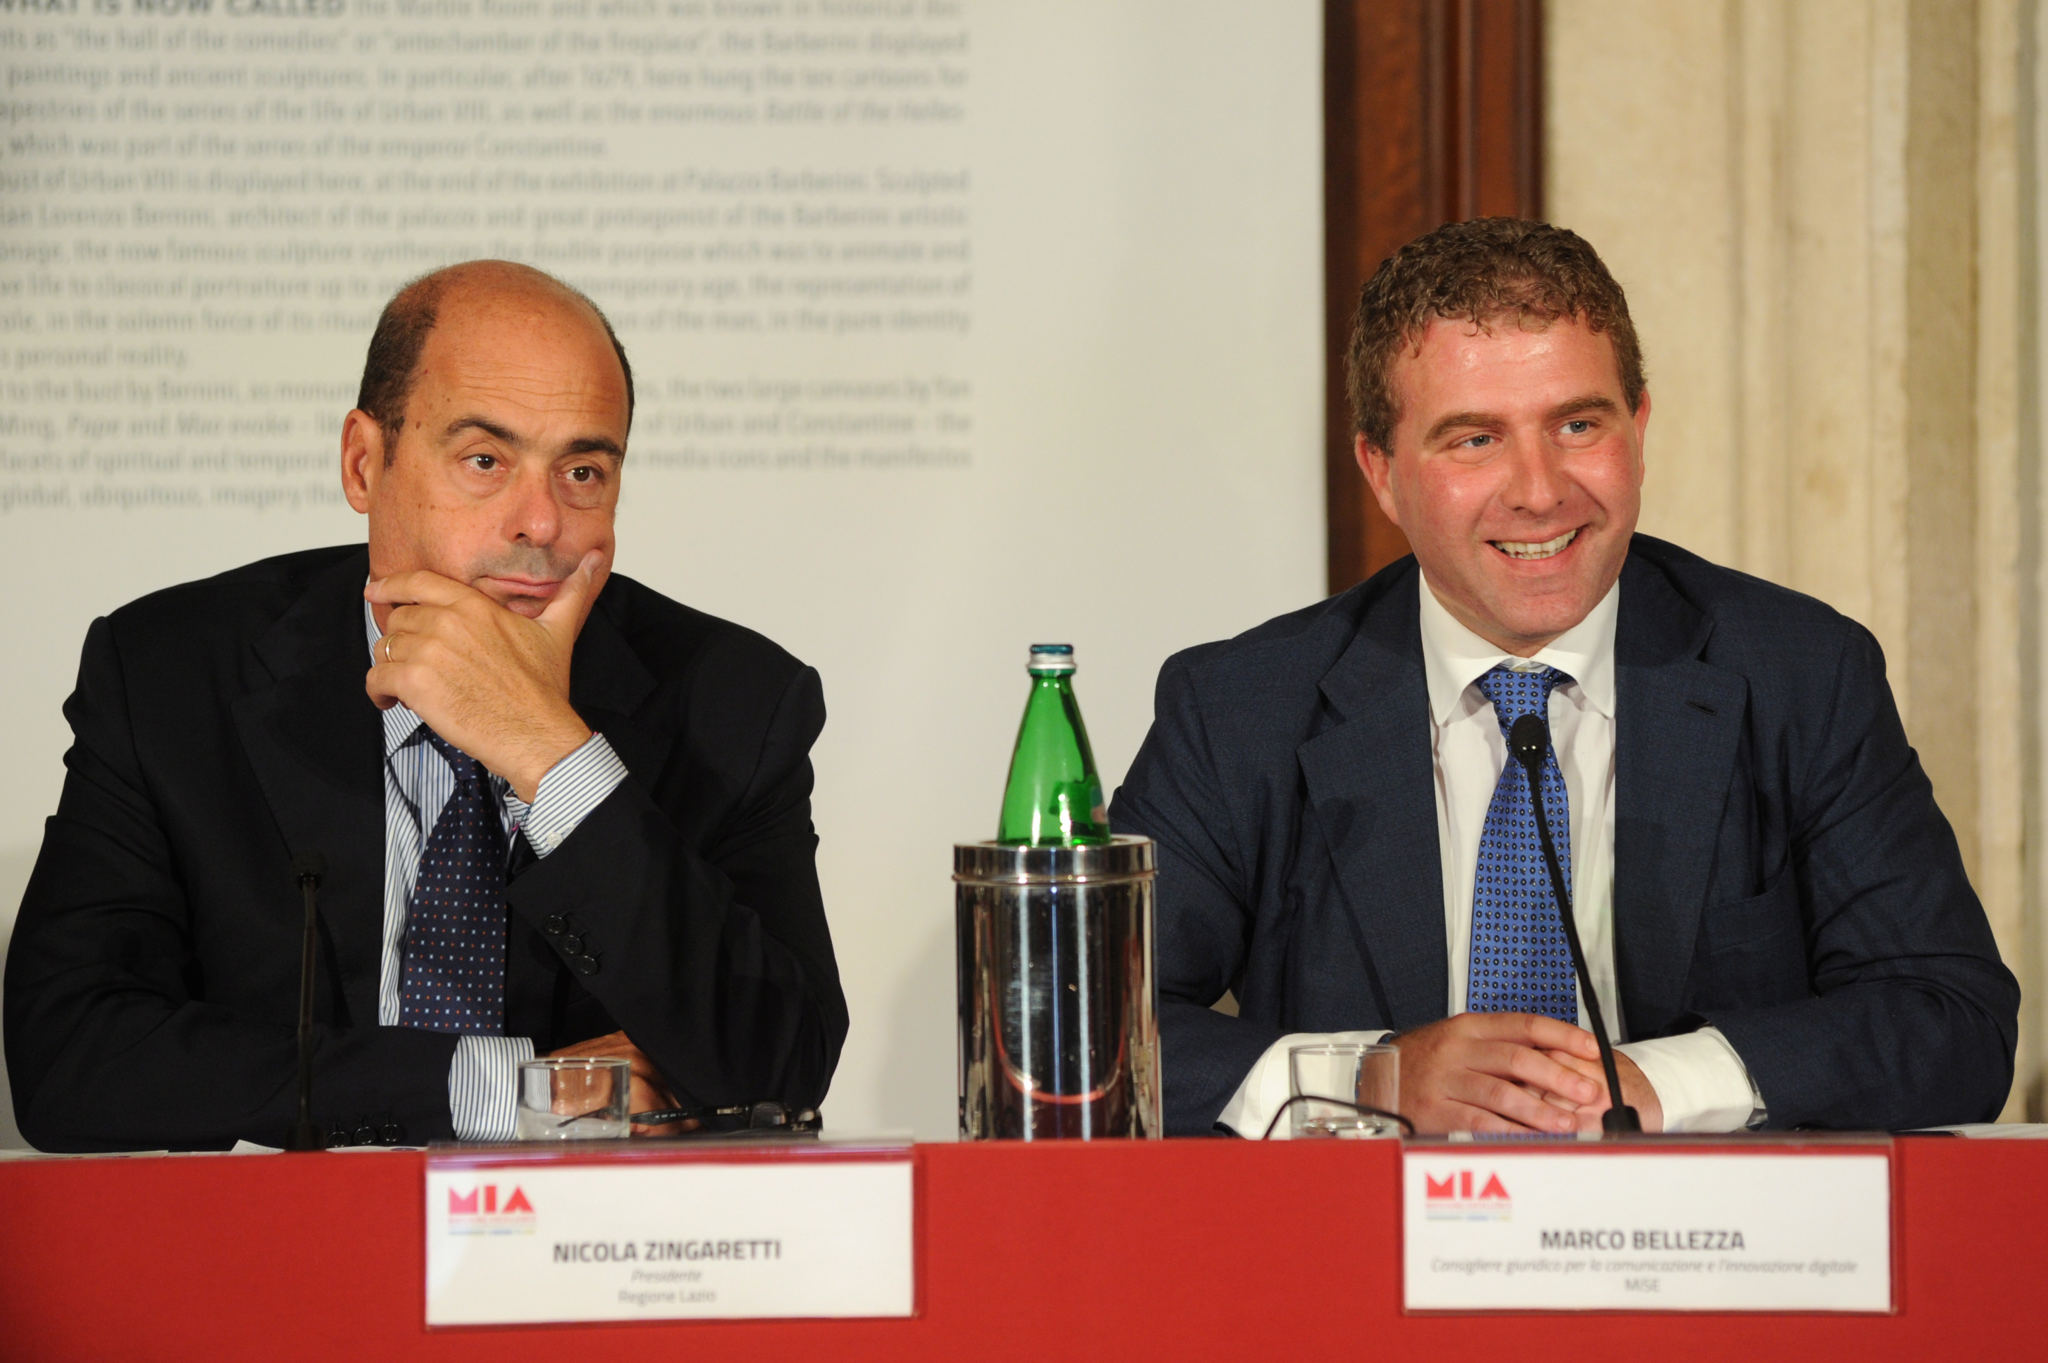 Nicola Zingaretti (Lazio Region President), Marco Bellezza (MISE Legal Counsel on Communication and Digital Innovation)